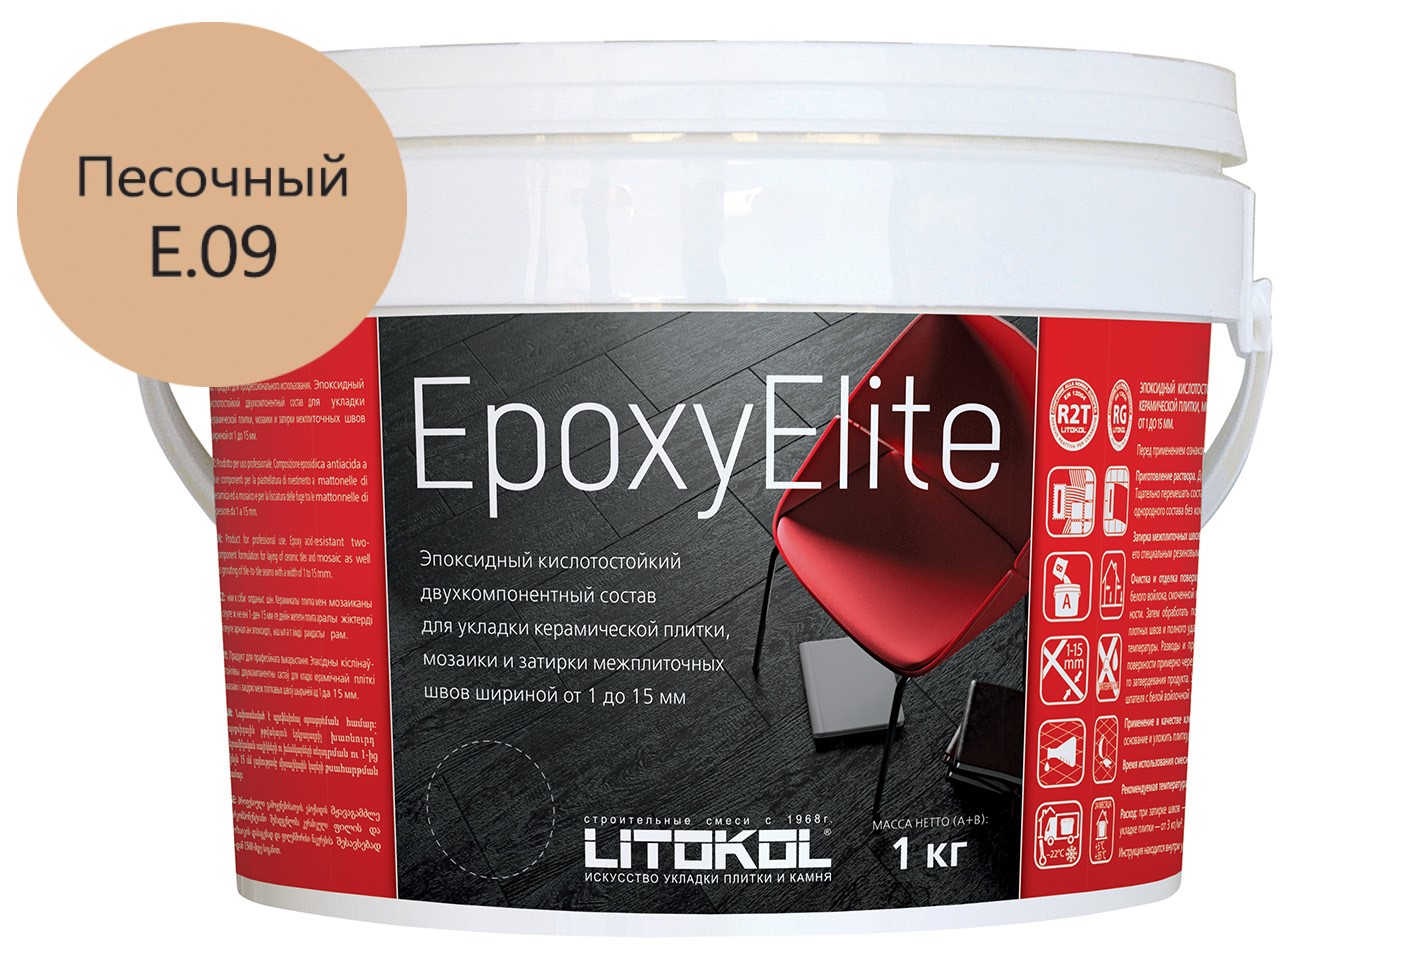 EpoxyElite E.09 Песочный